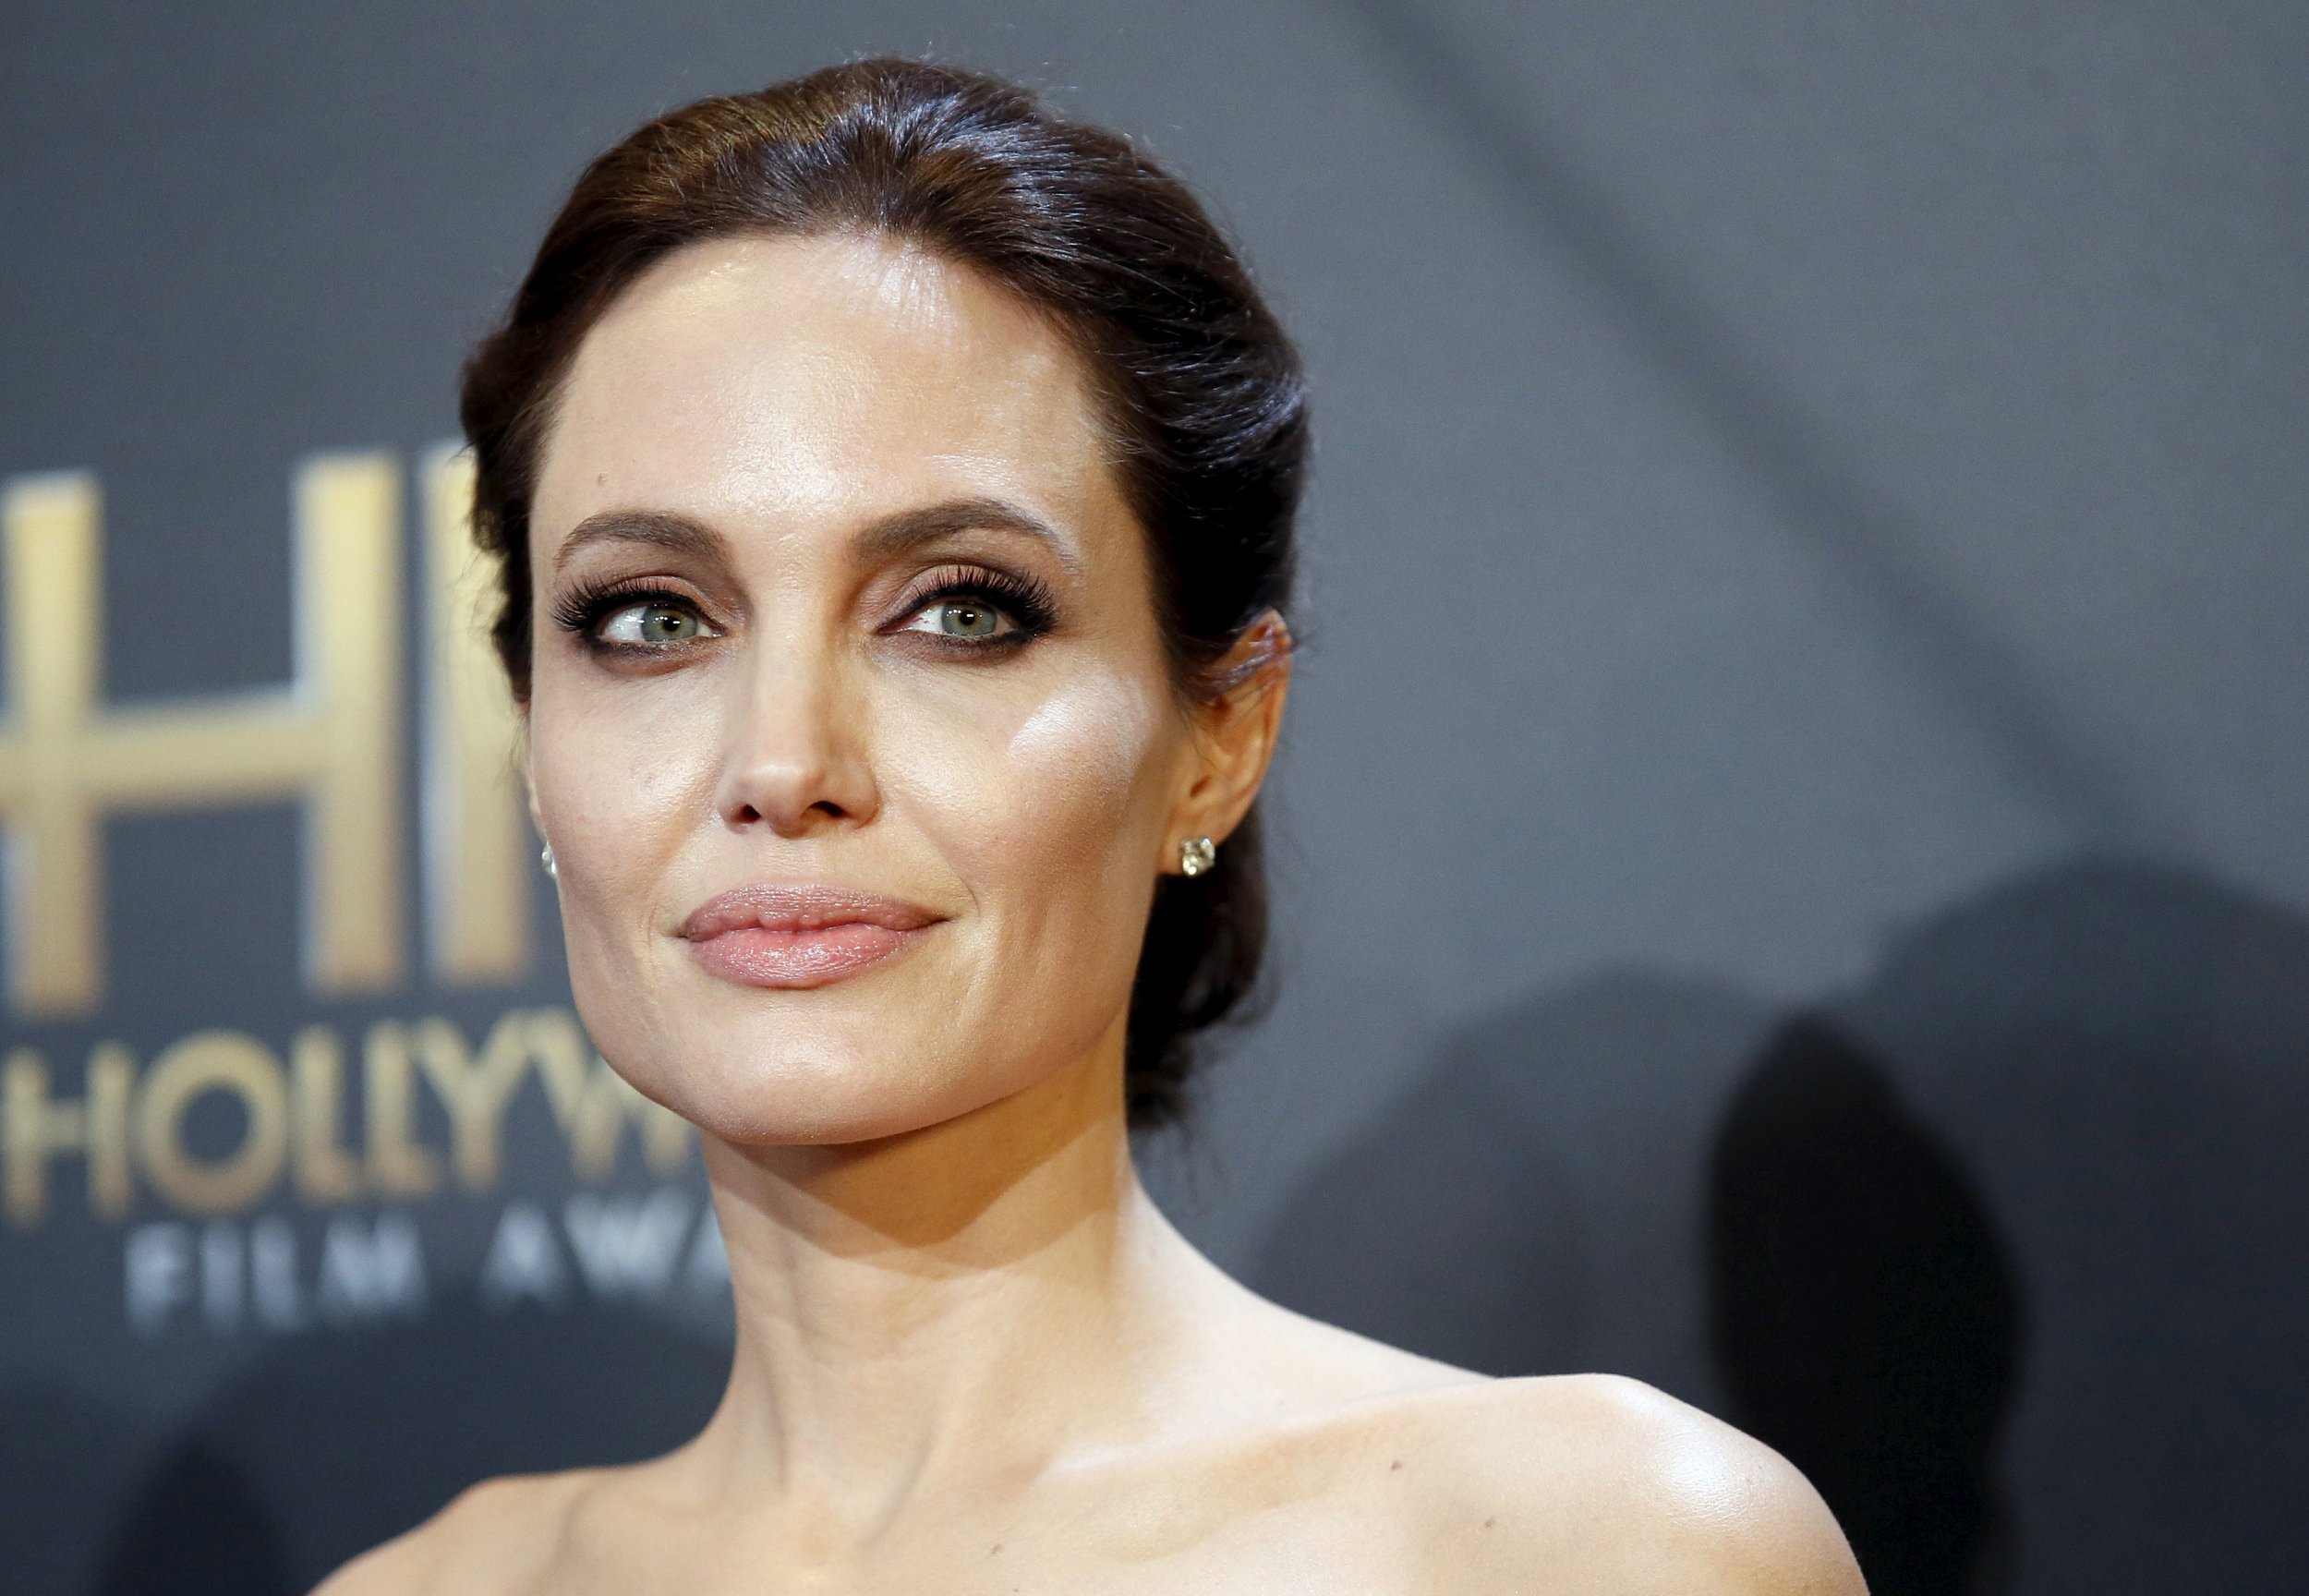 Download free Angelina Jolie Chin Pose Wallpaper - MrWallpaper.com